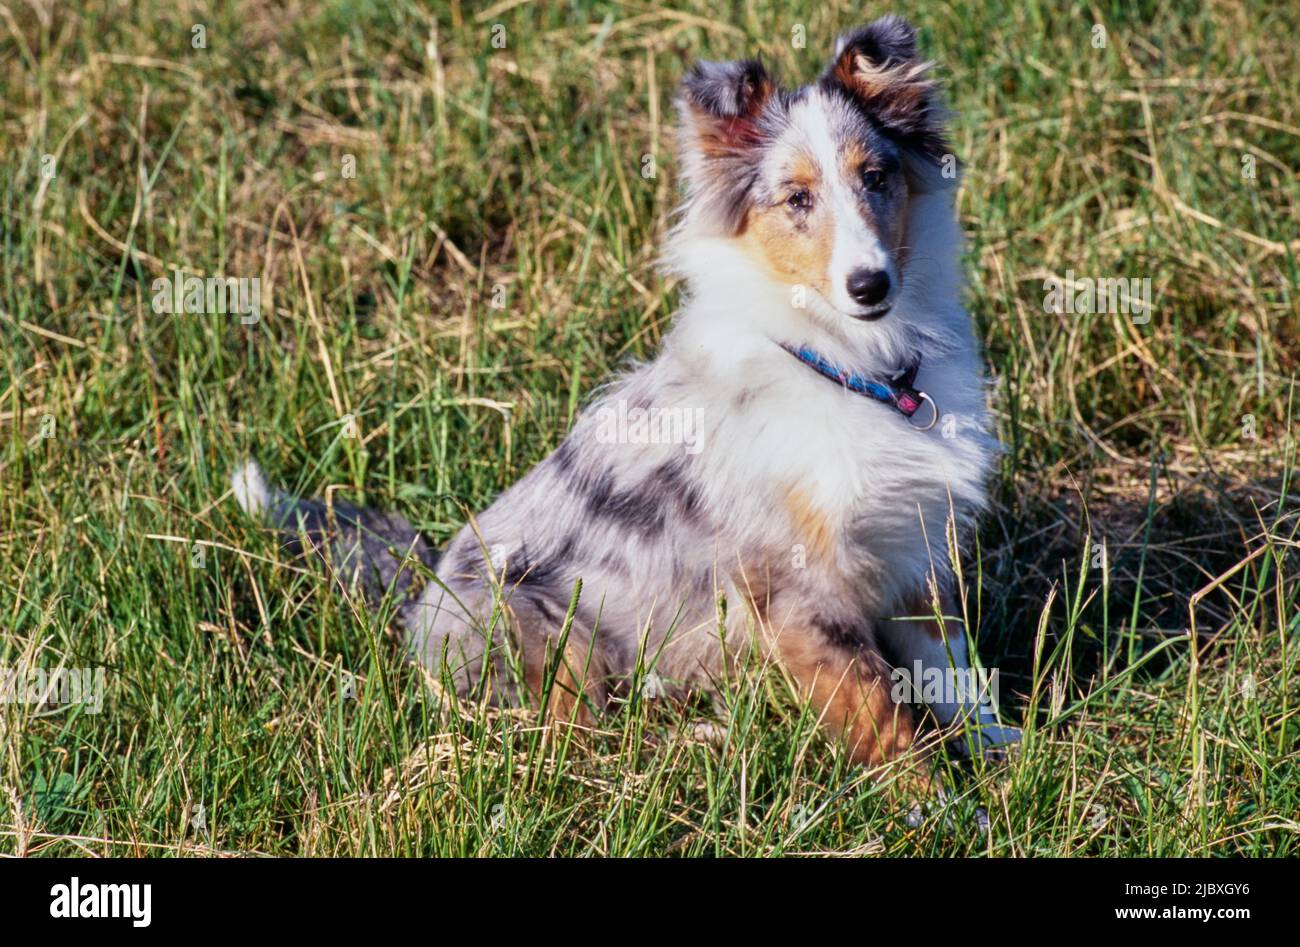 A sheltie dog sitting in a grassy field Stock Photo